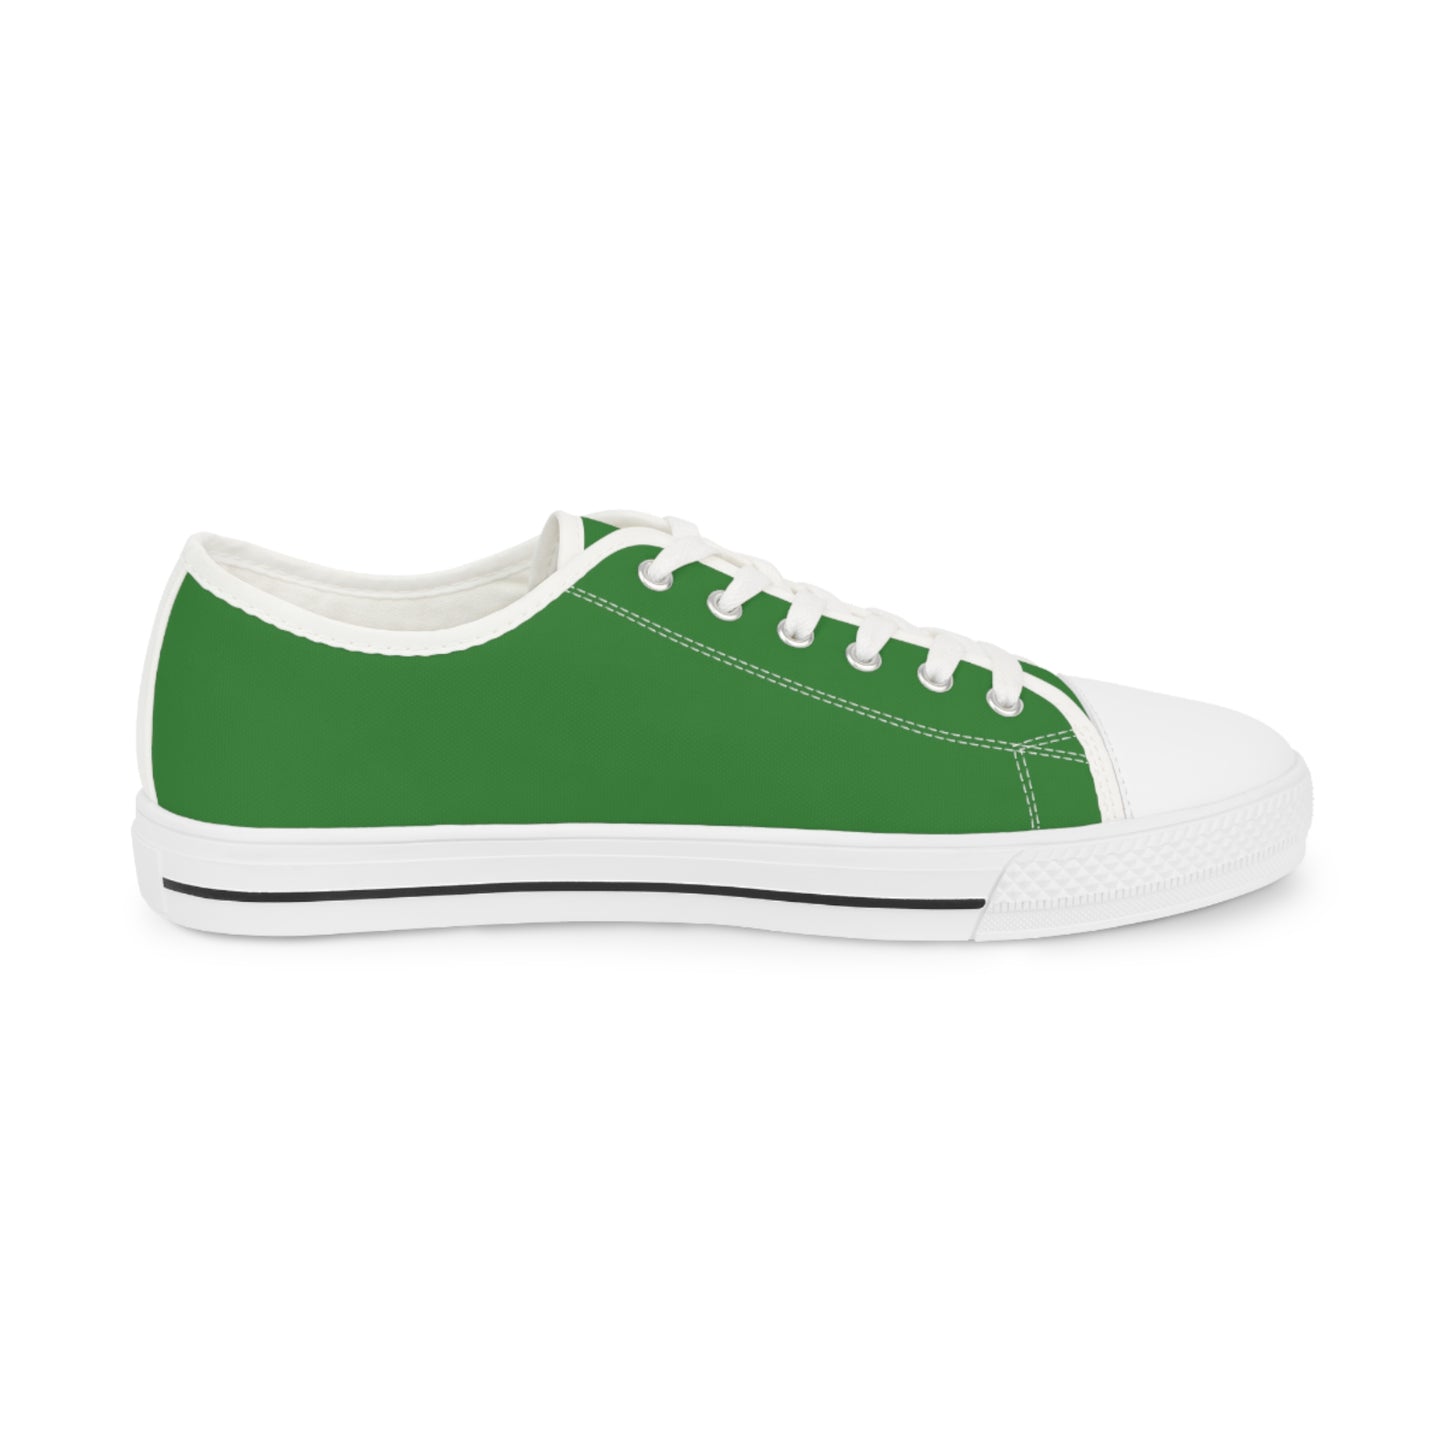 Men's Low Top Sneakers - Green US 14 Black sole